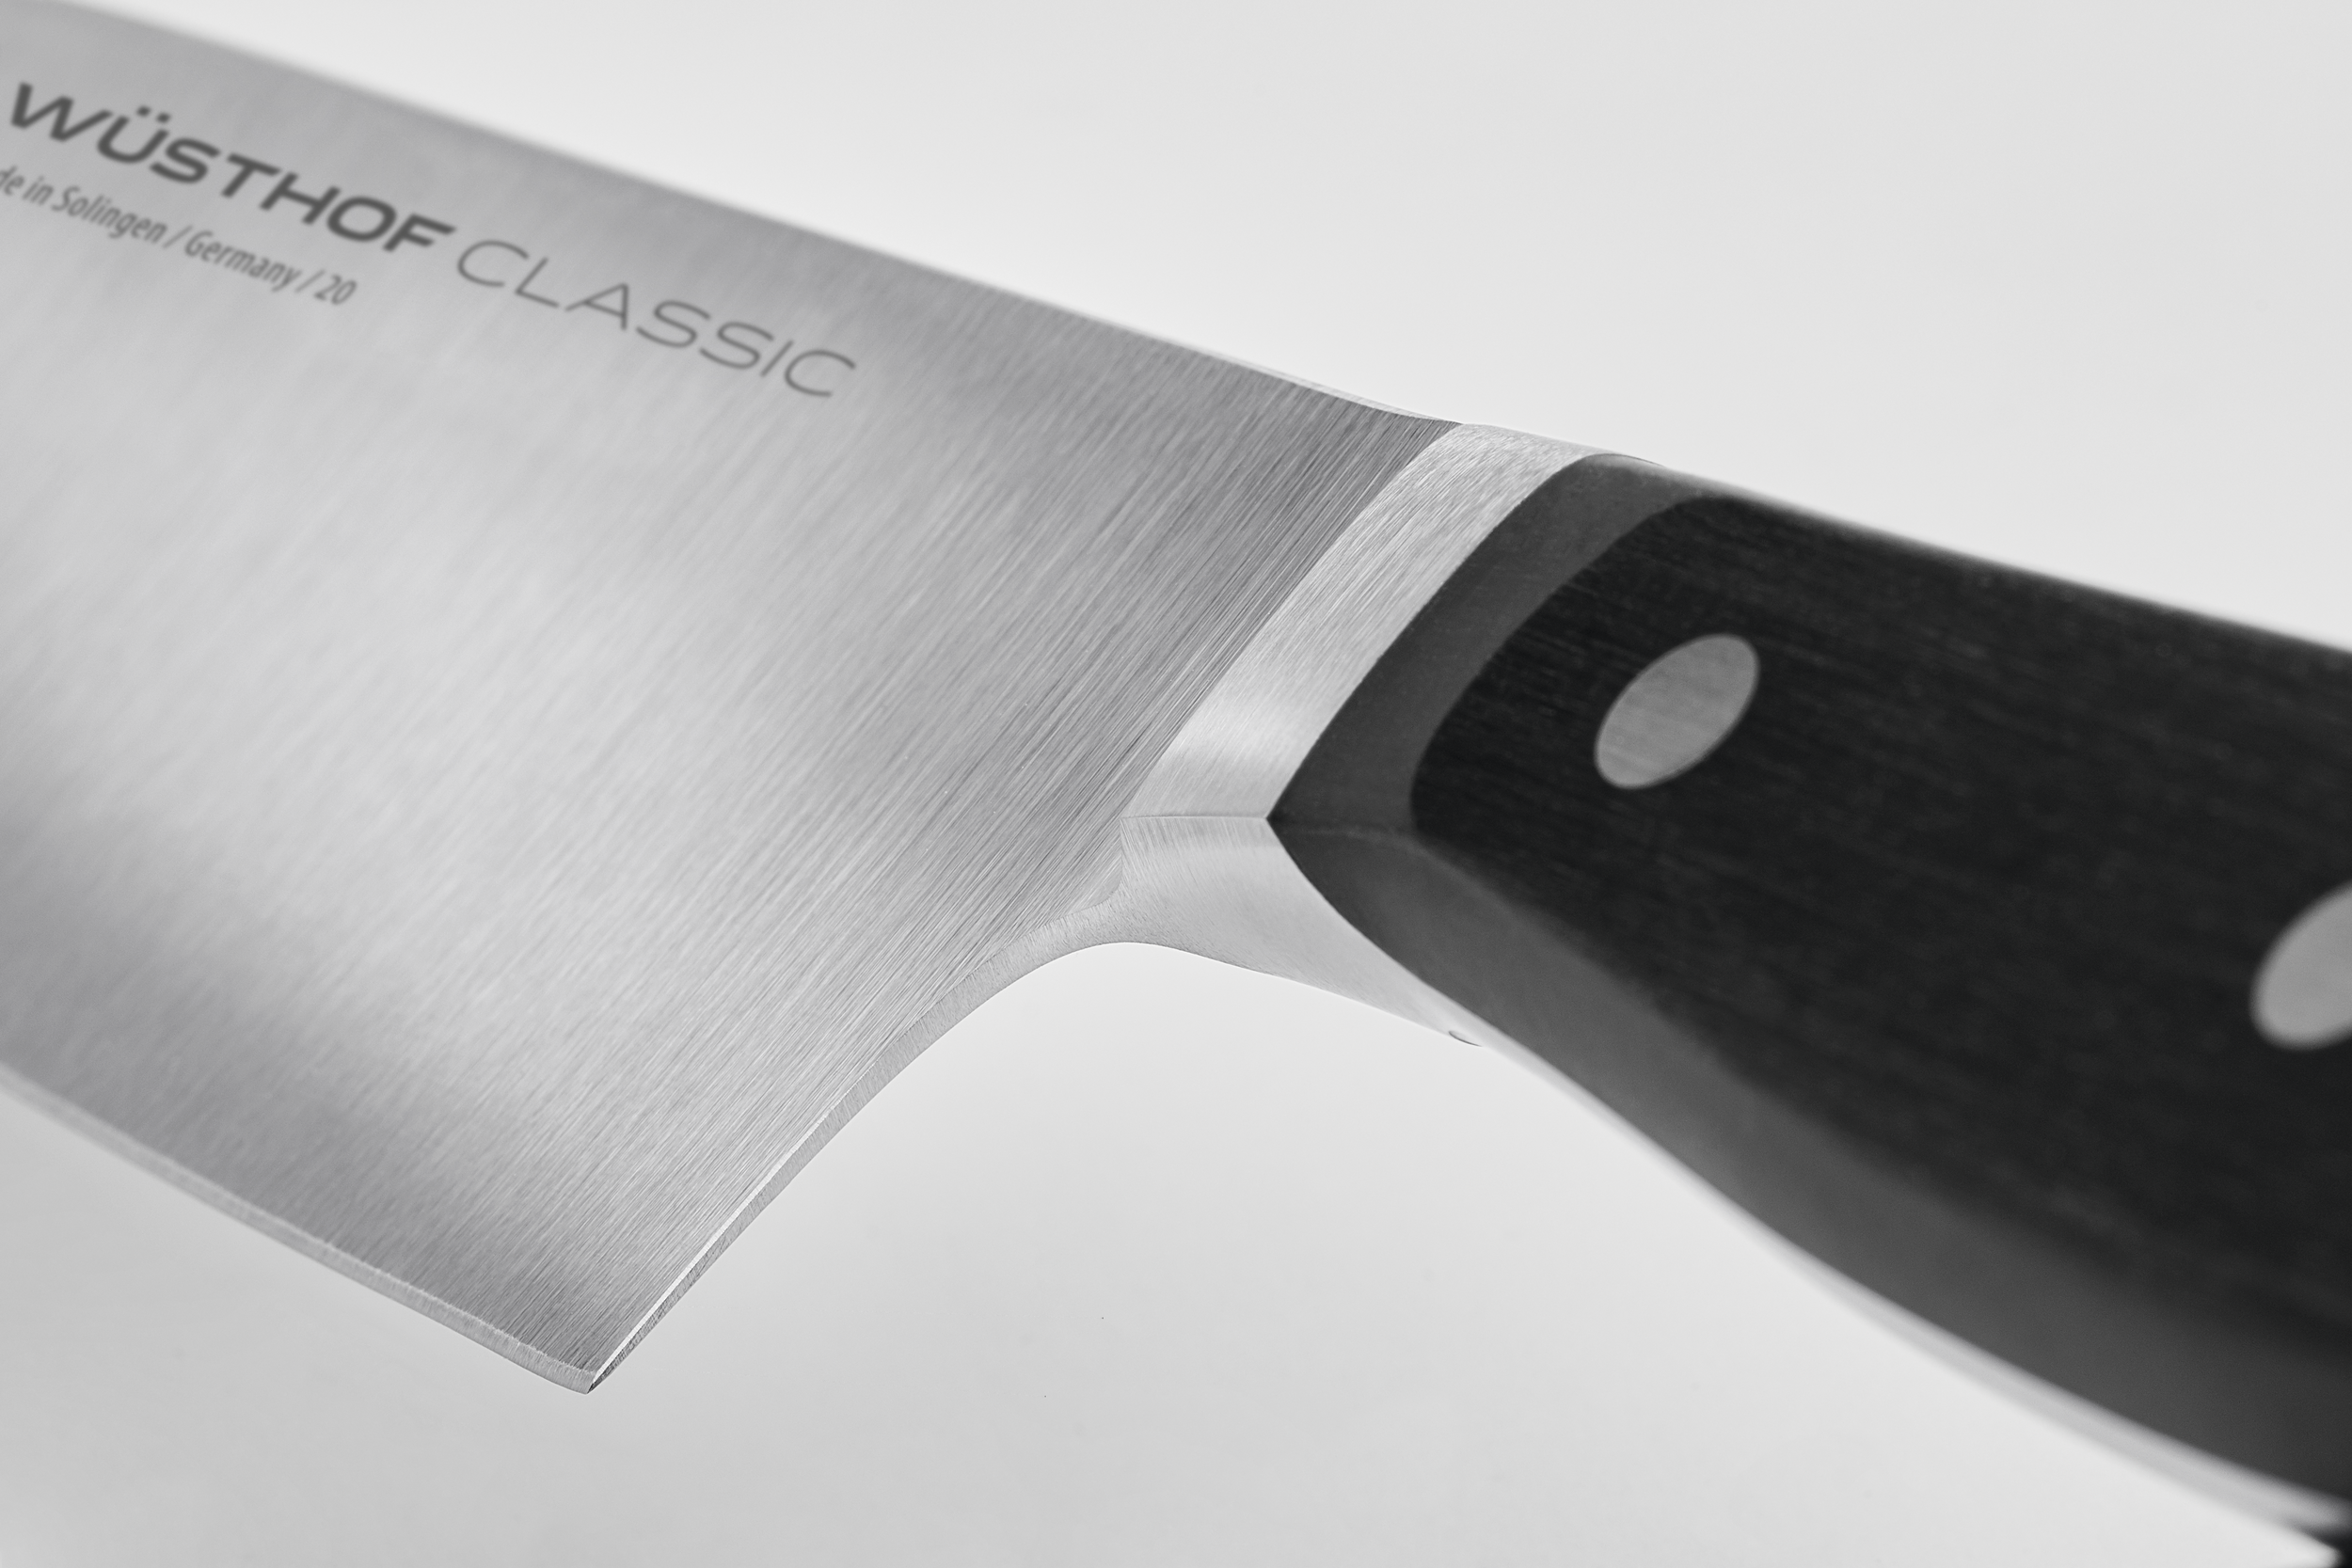 WÜSTHOF Classic 6” Chef's Knife, Black